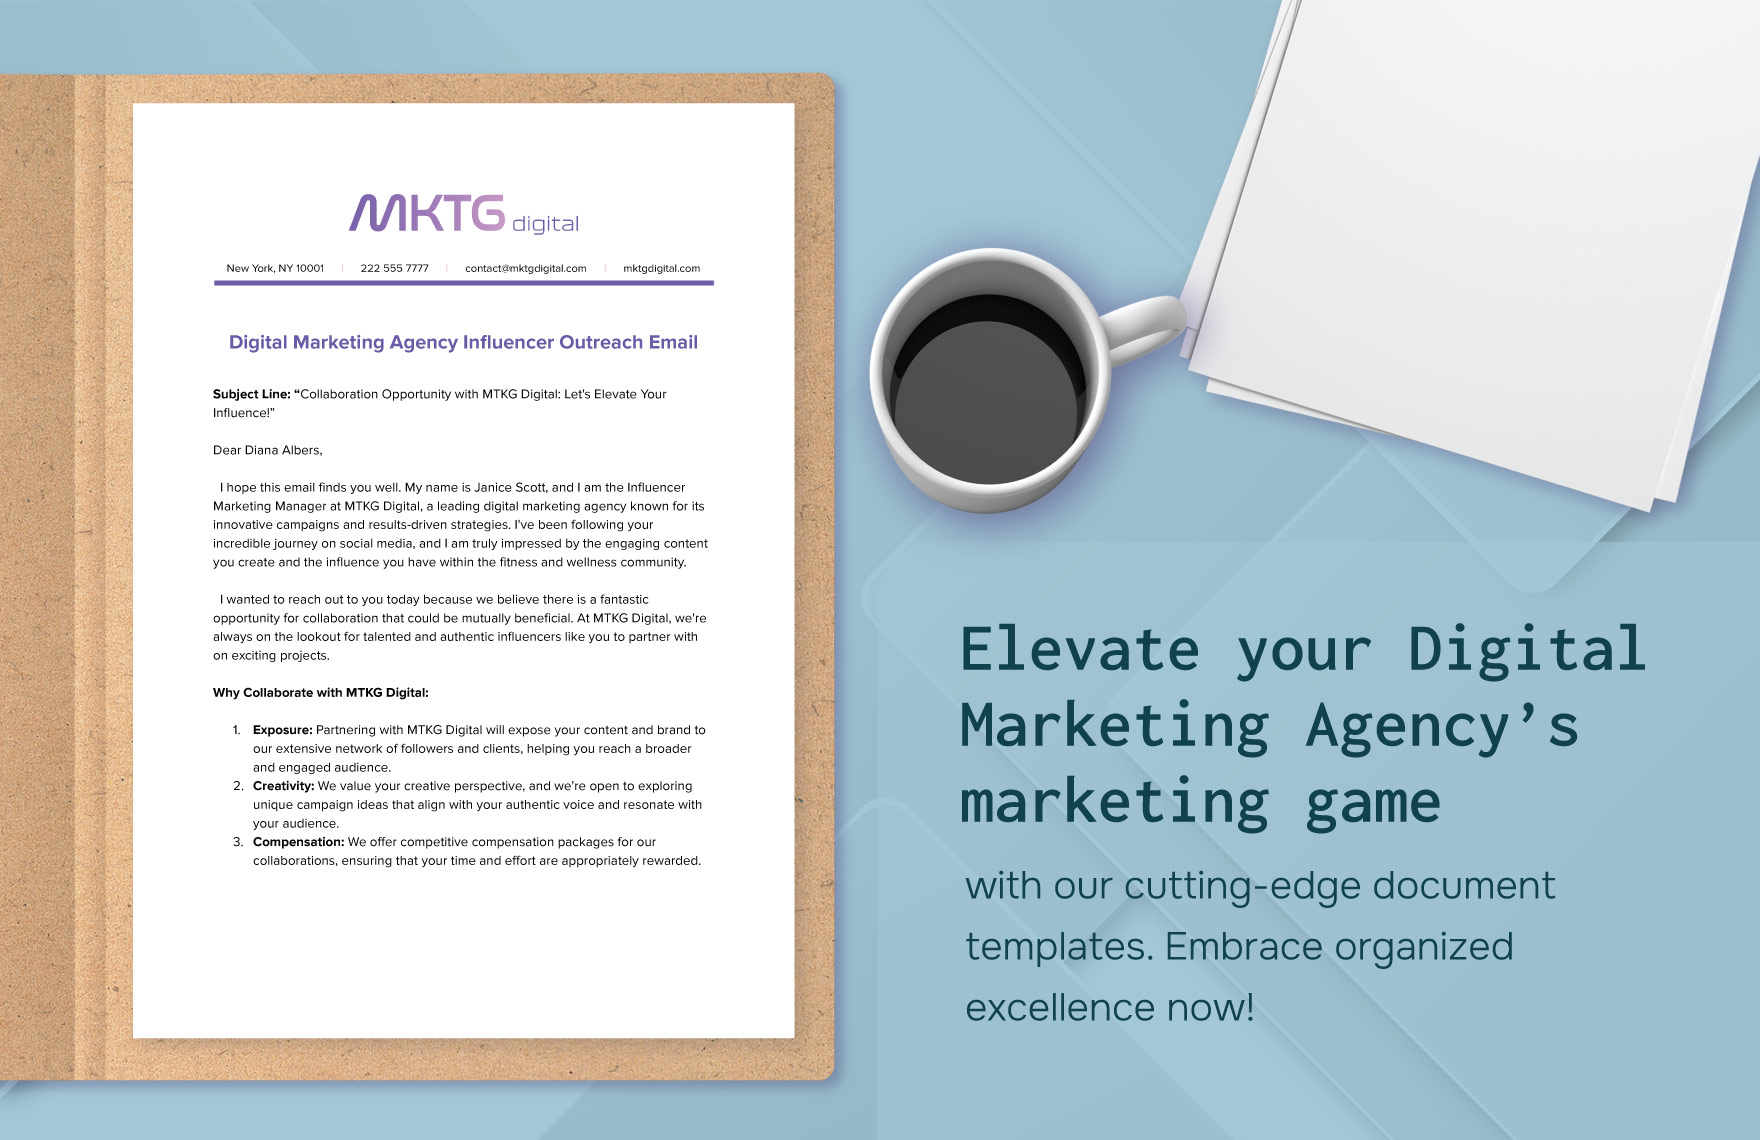 Digital Marketing Agency Influencer Outreach Email Template